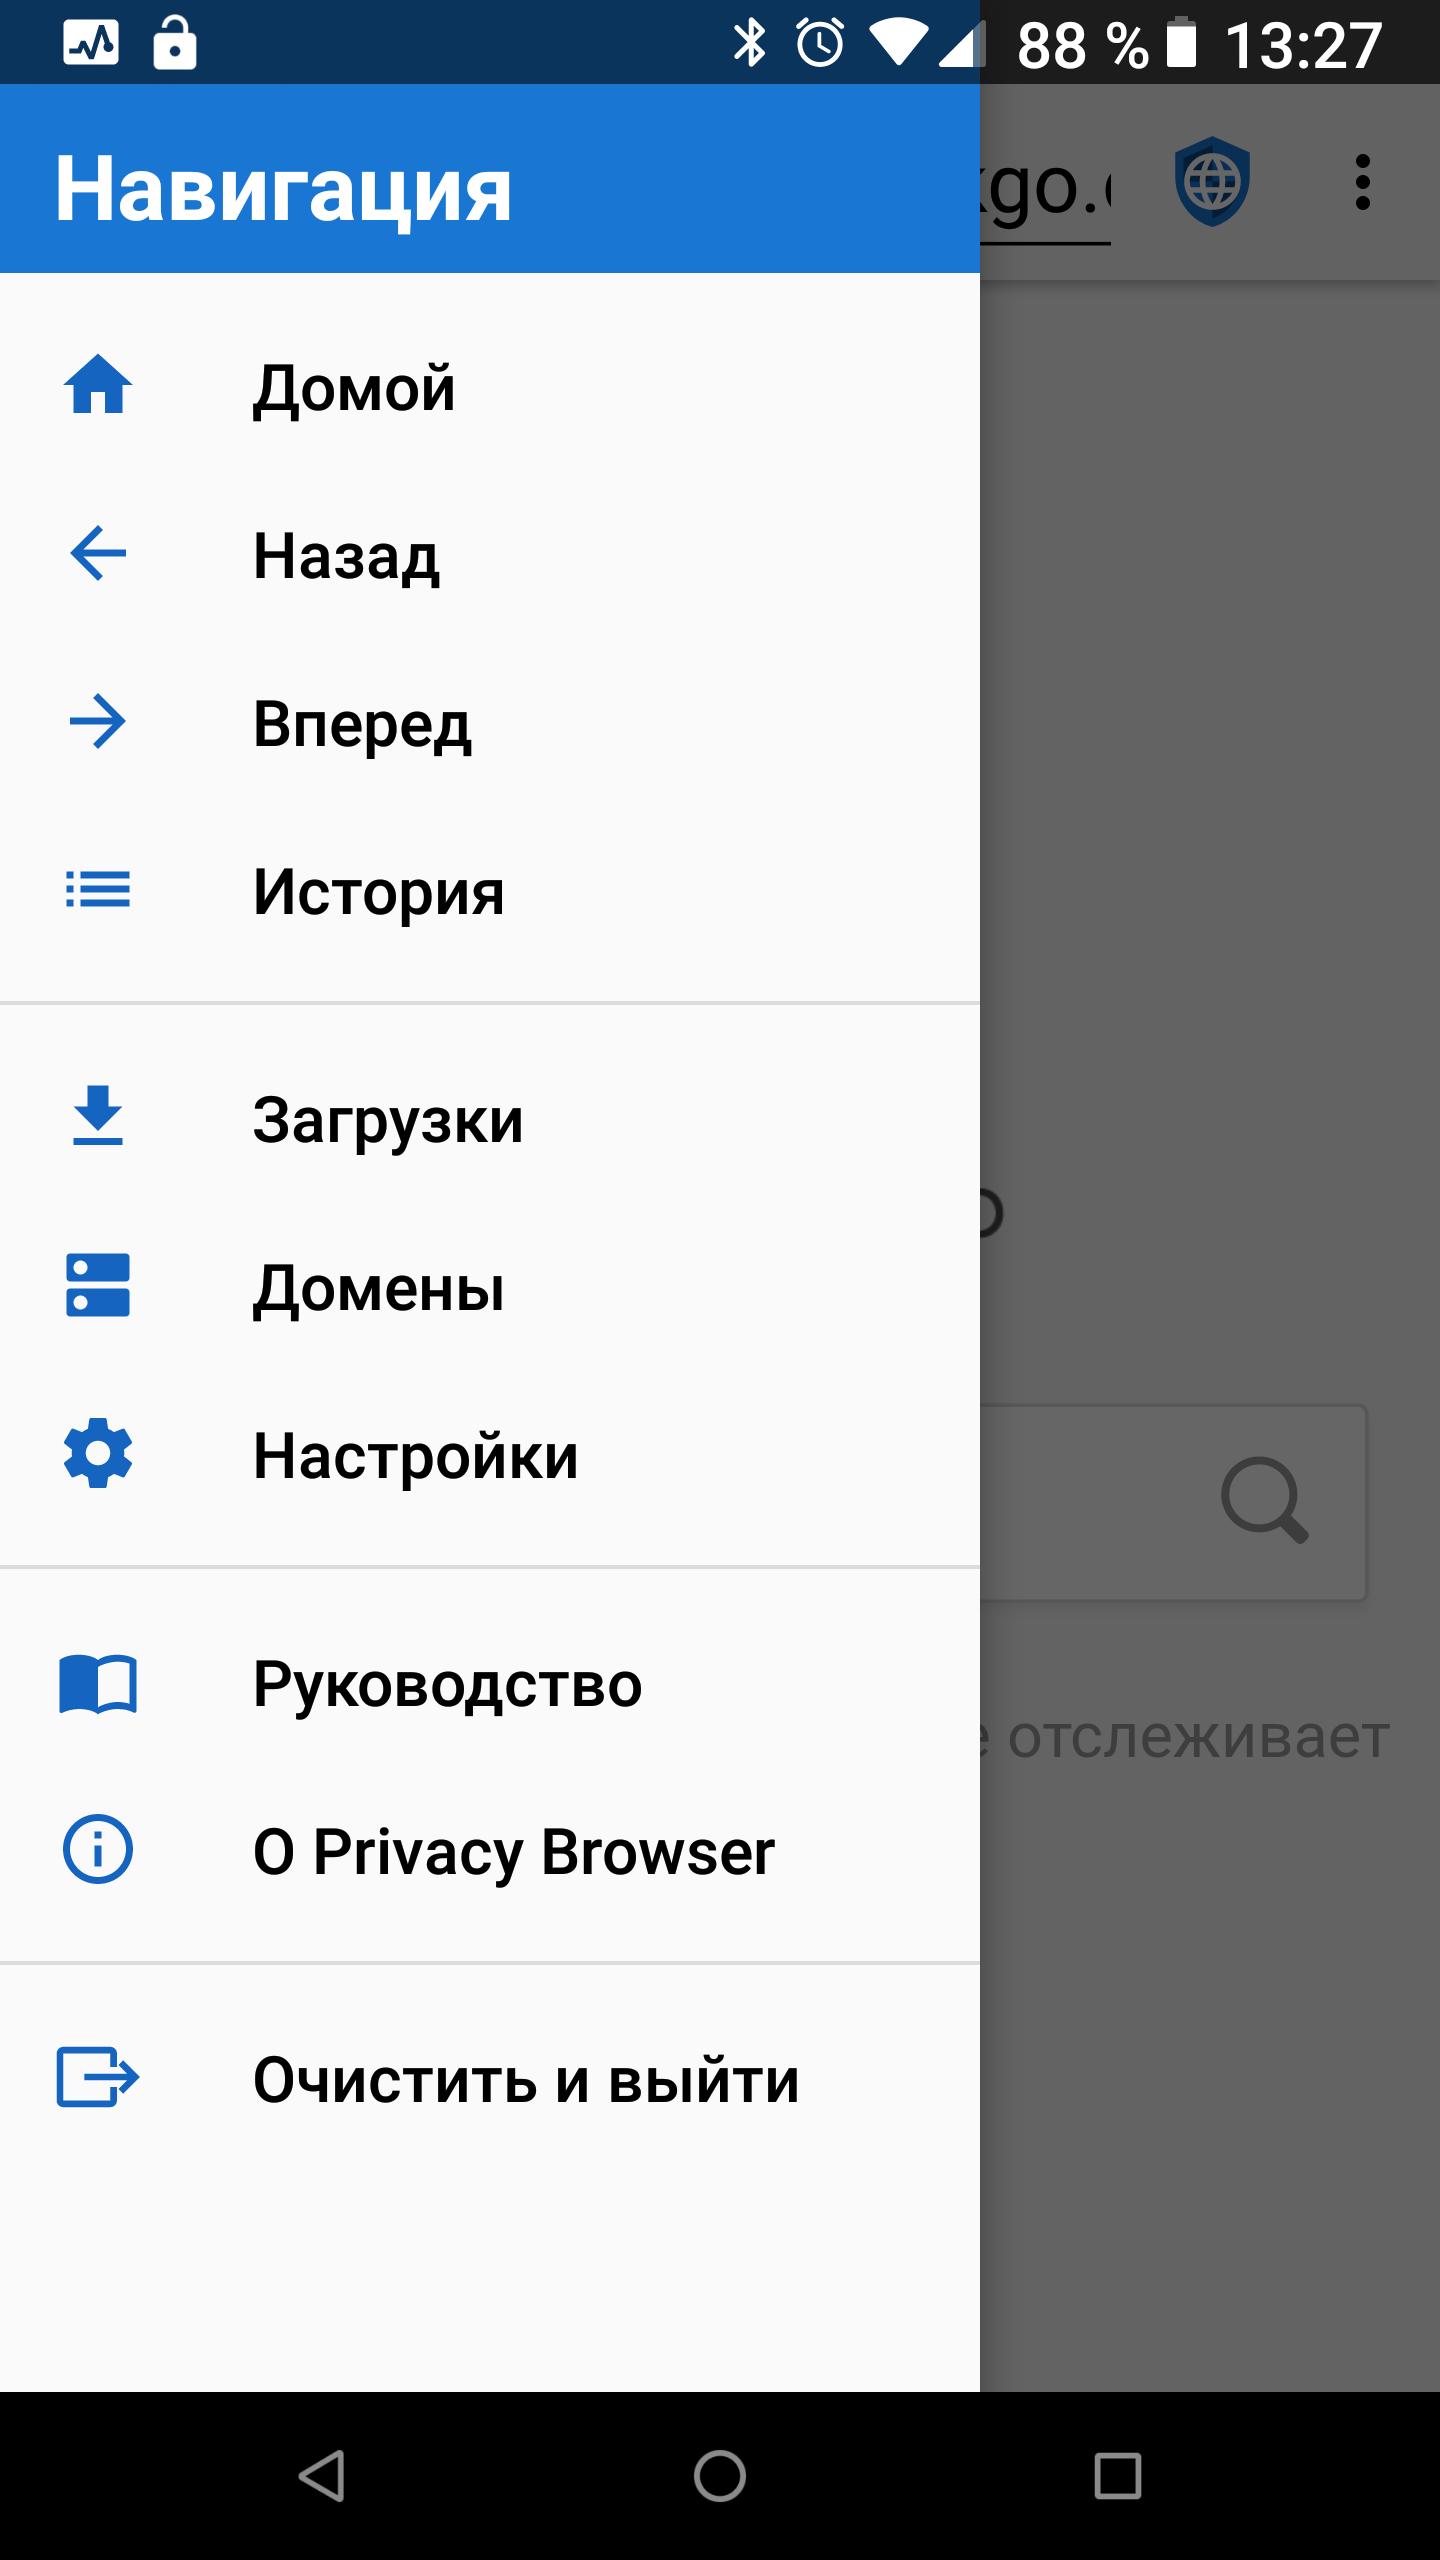 fastlane/metadata/android/ru-RU/images/phoneScreenshots/05-NavigationMenu.png